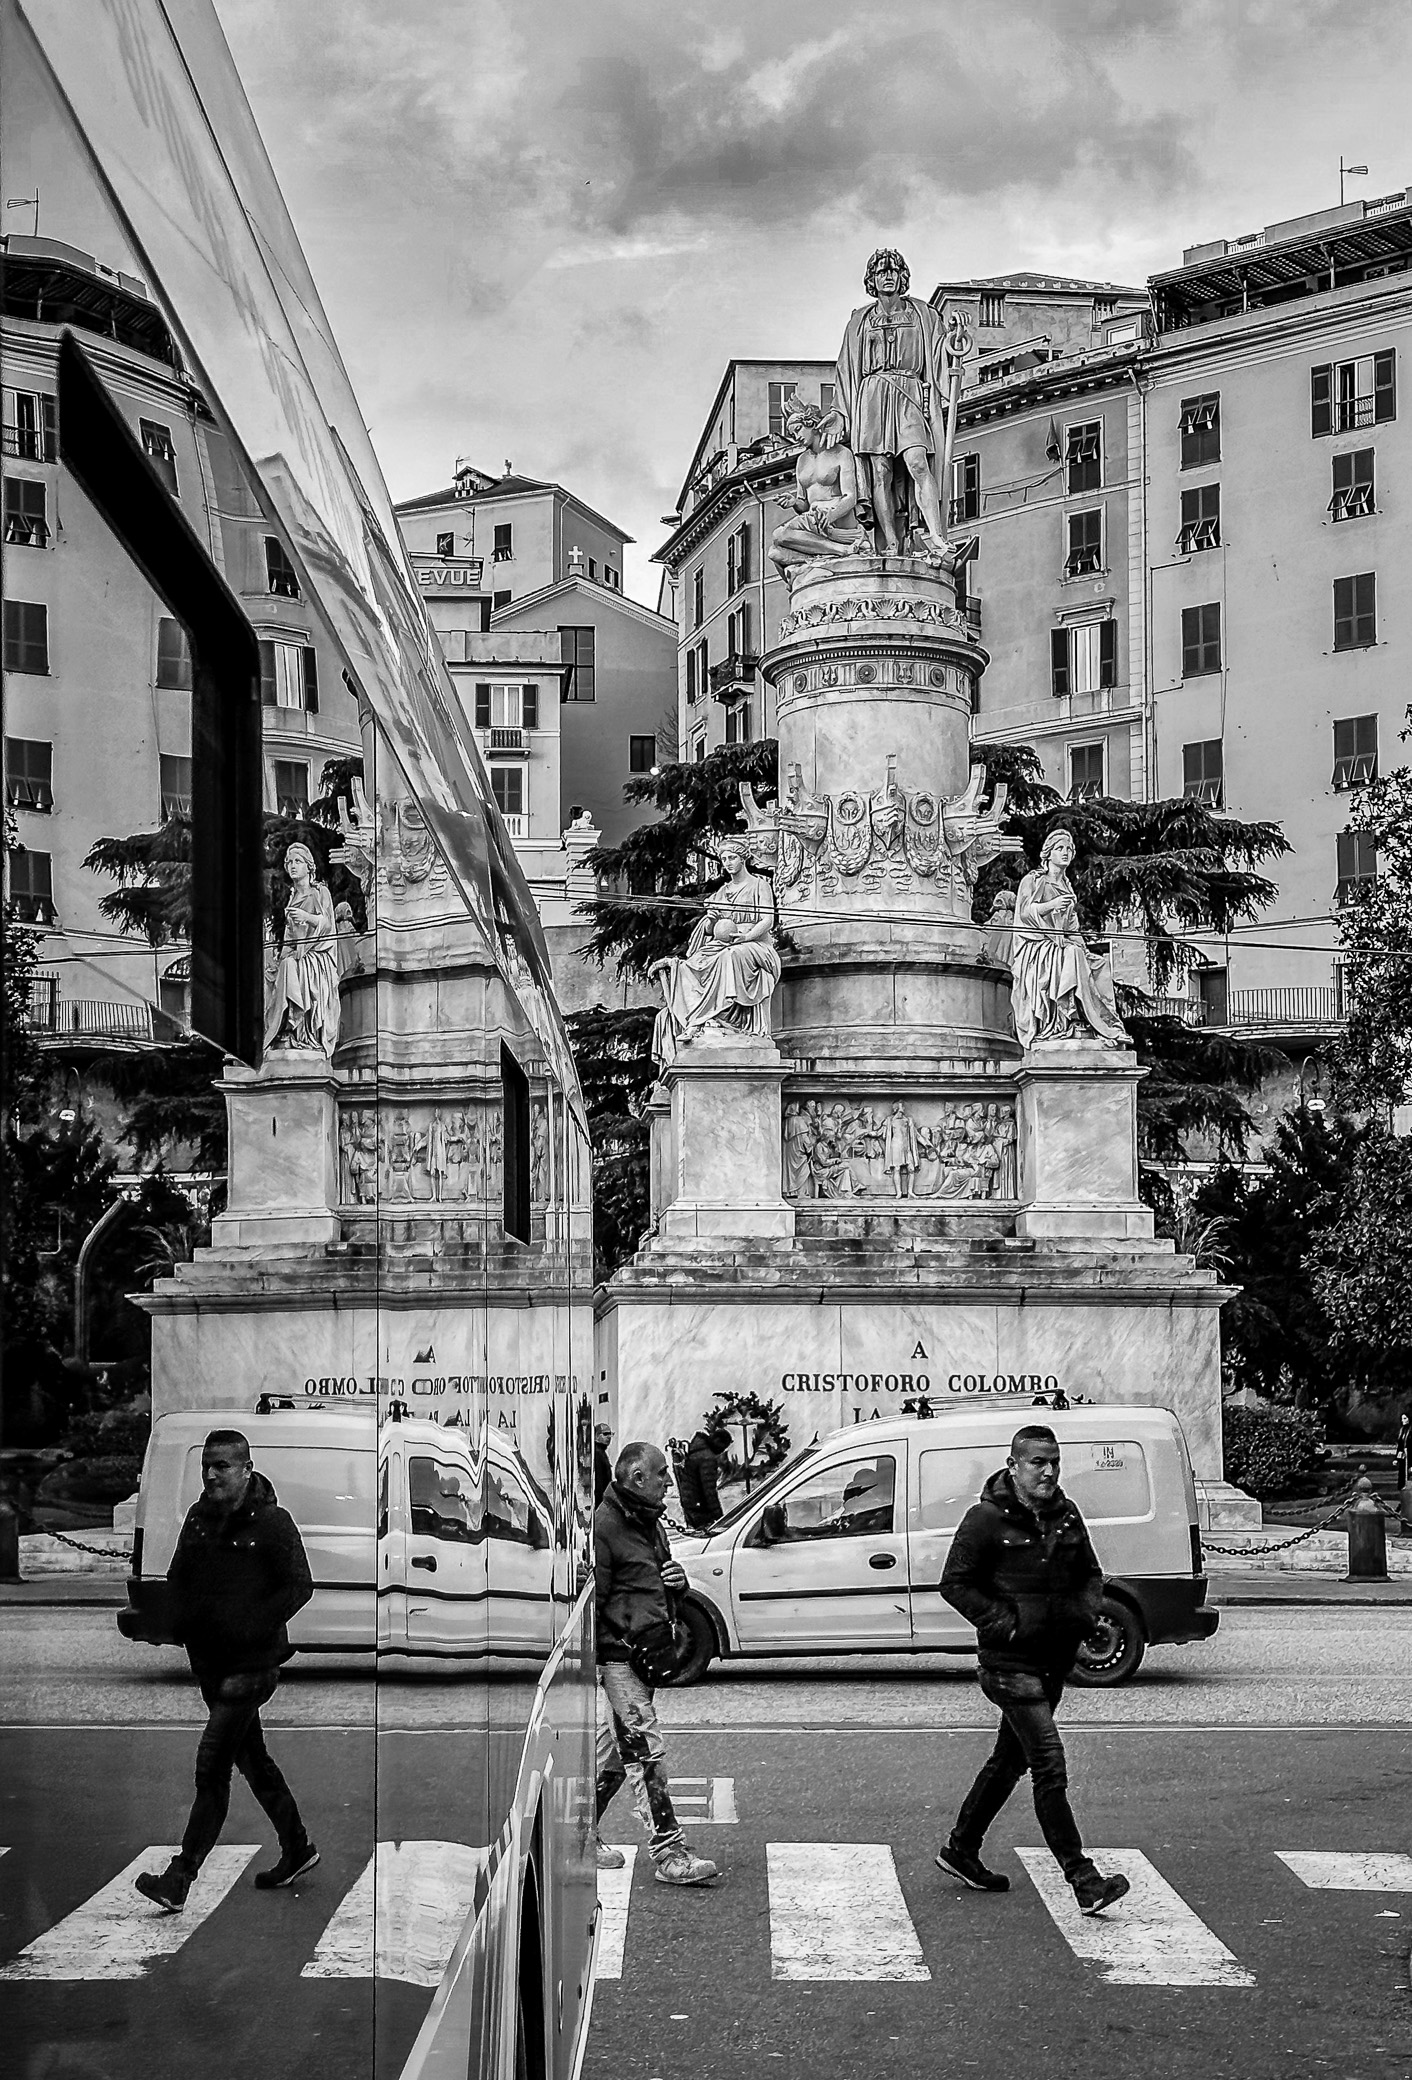 Christopher Columbus Monument in Genova, Italy